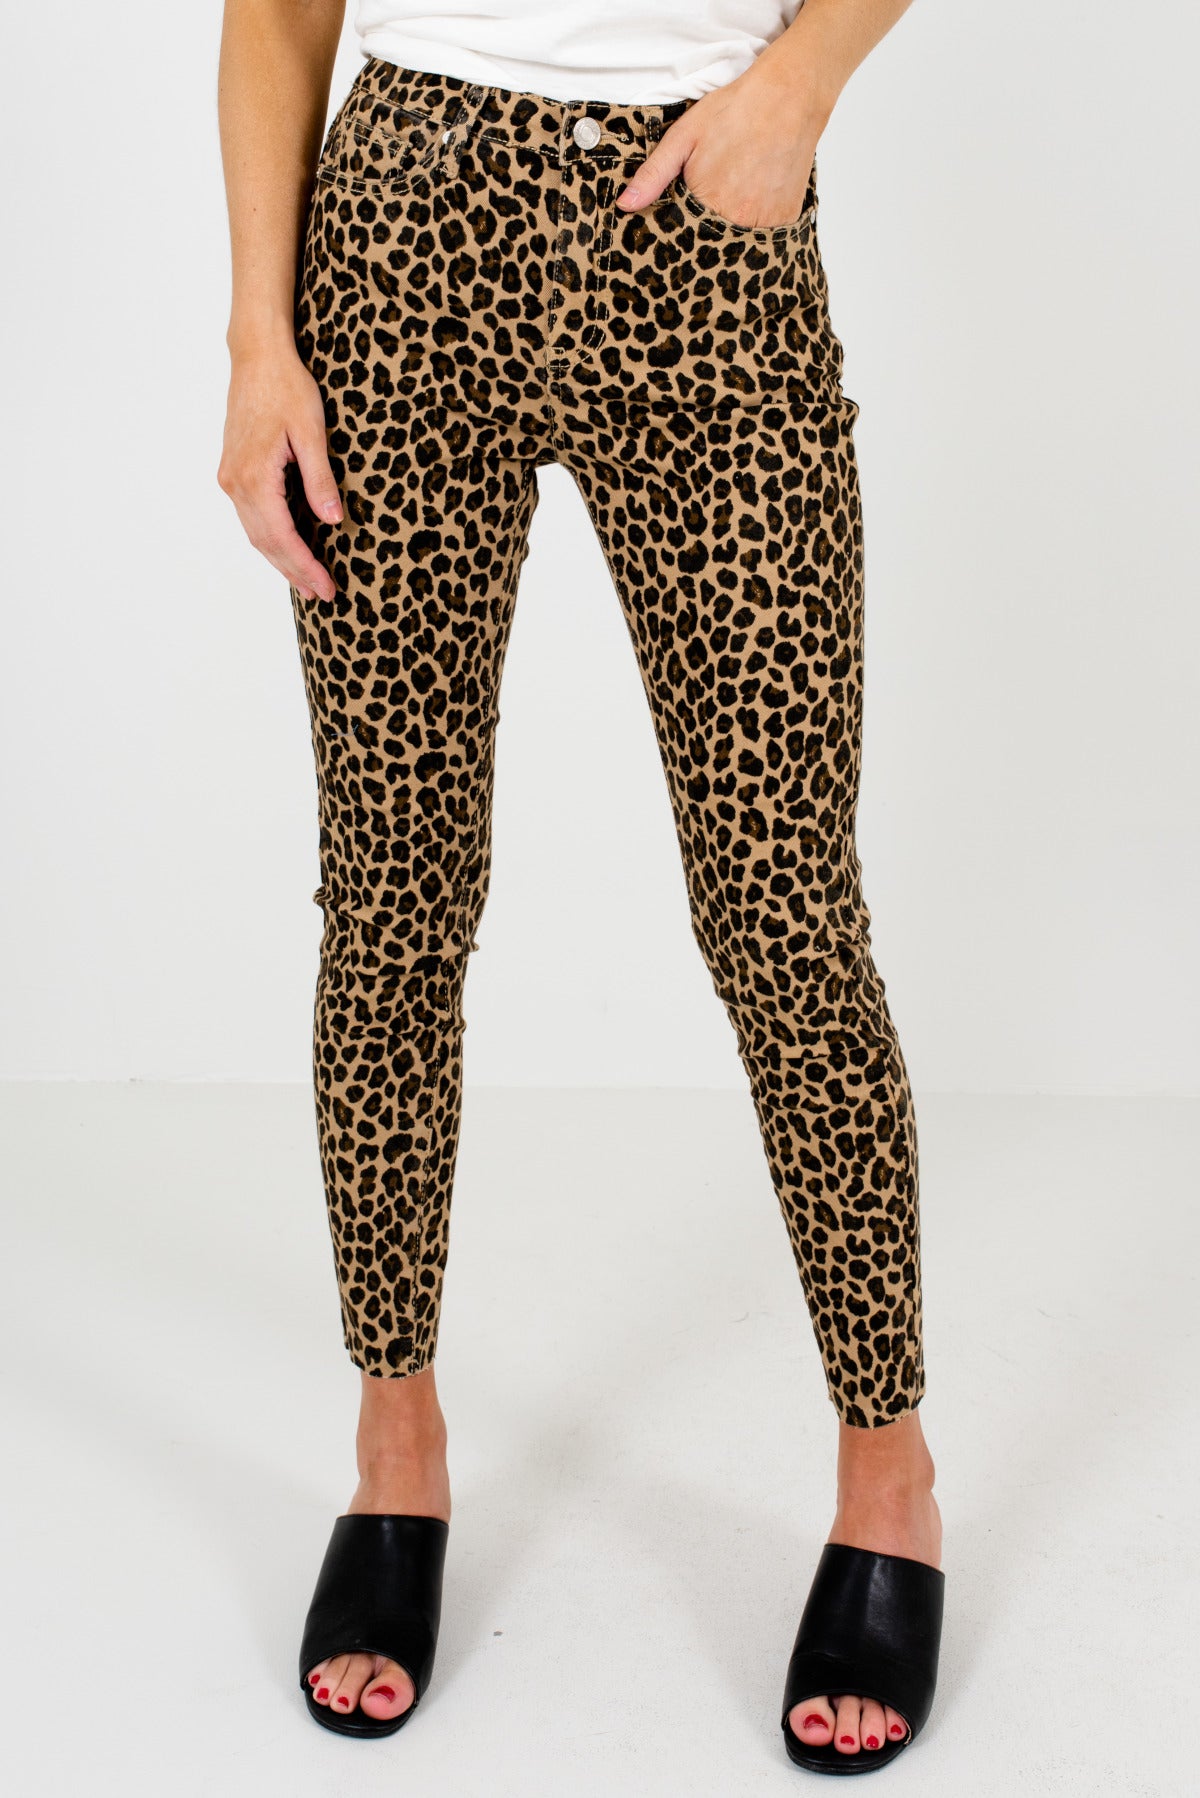 leopard print skinny jeans